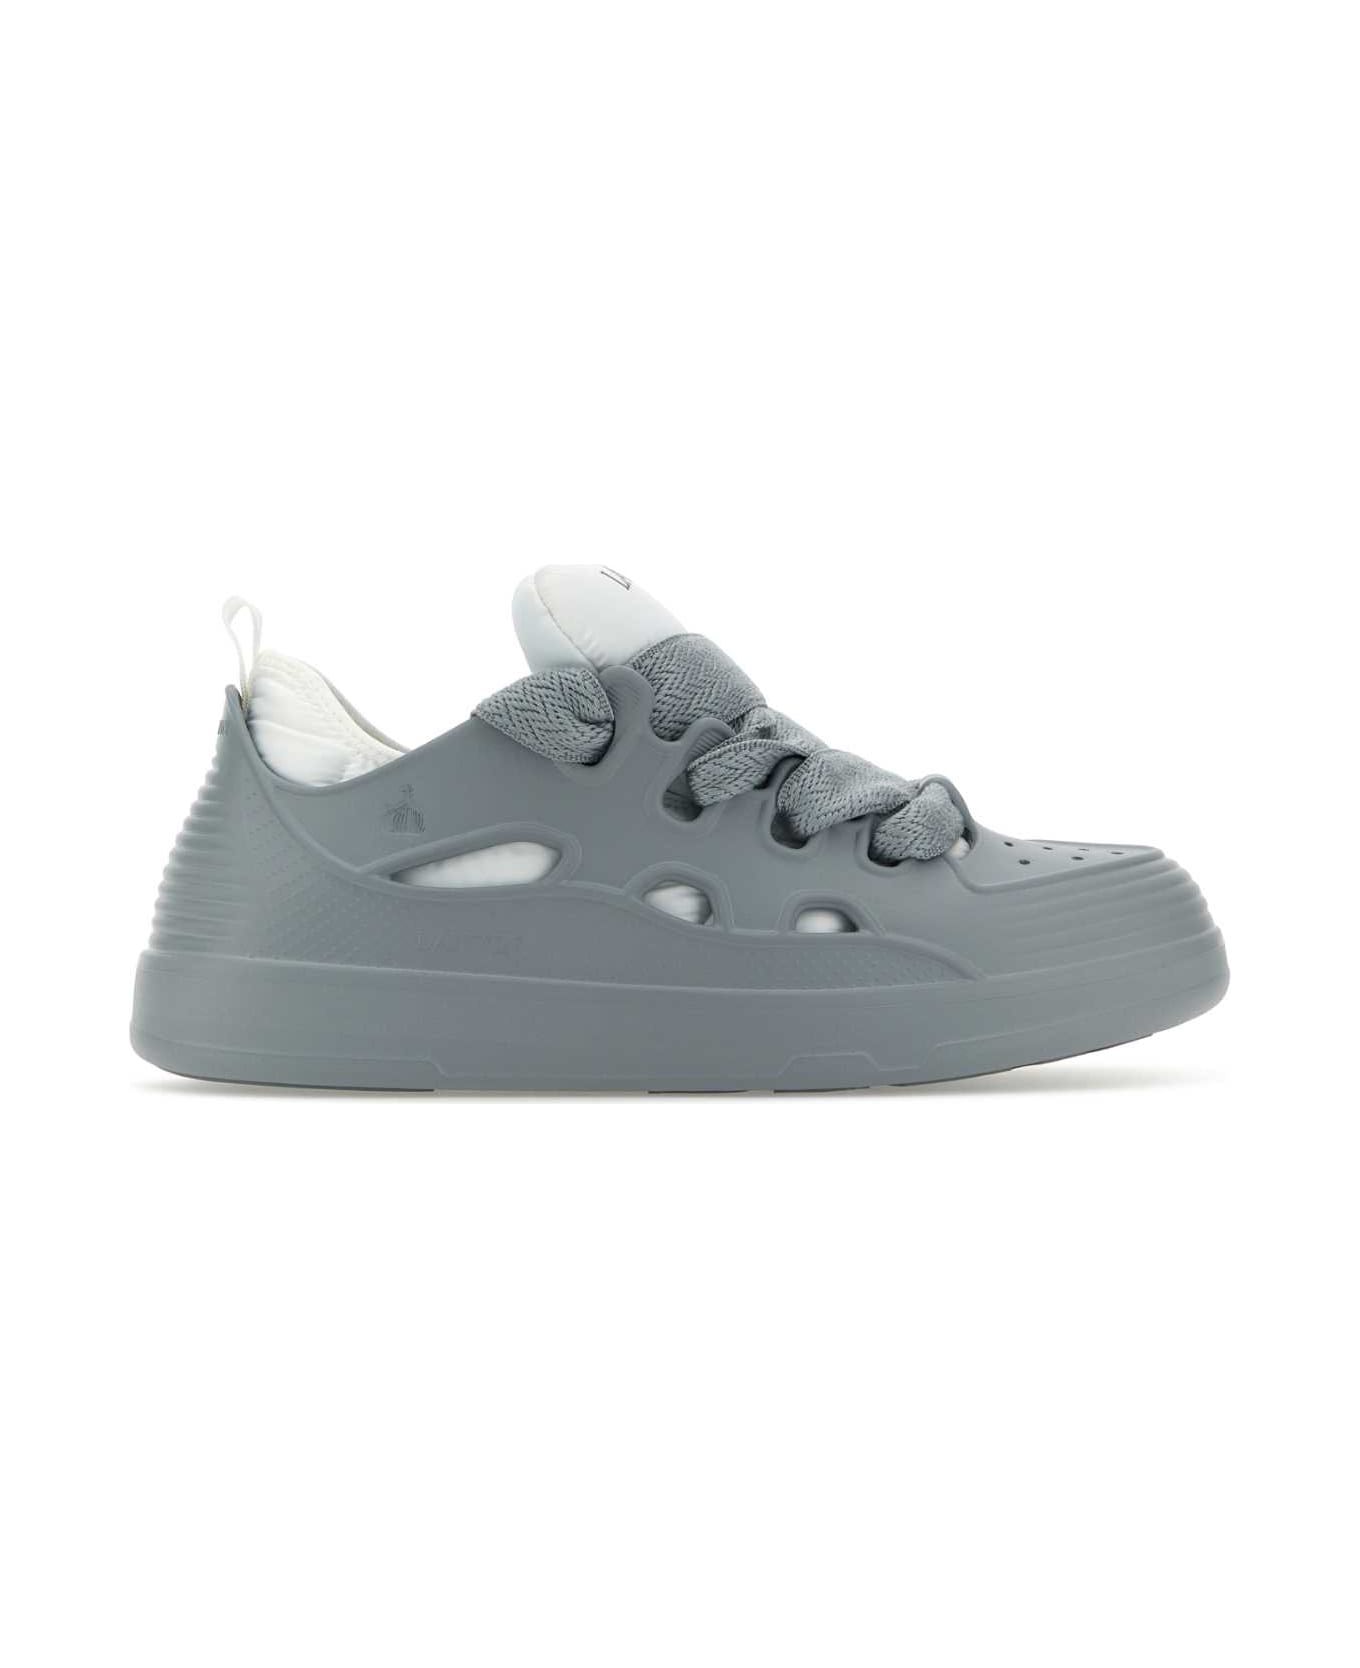 Lanvin Grey Rubber Curb Sneakers - PEARLGREY スニーカー